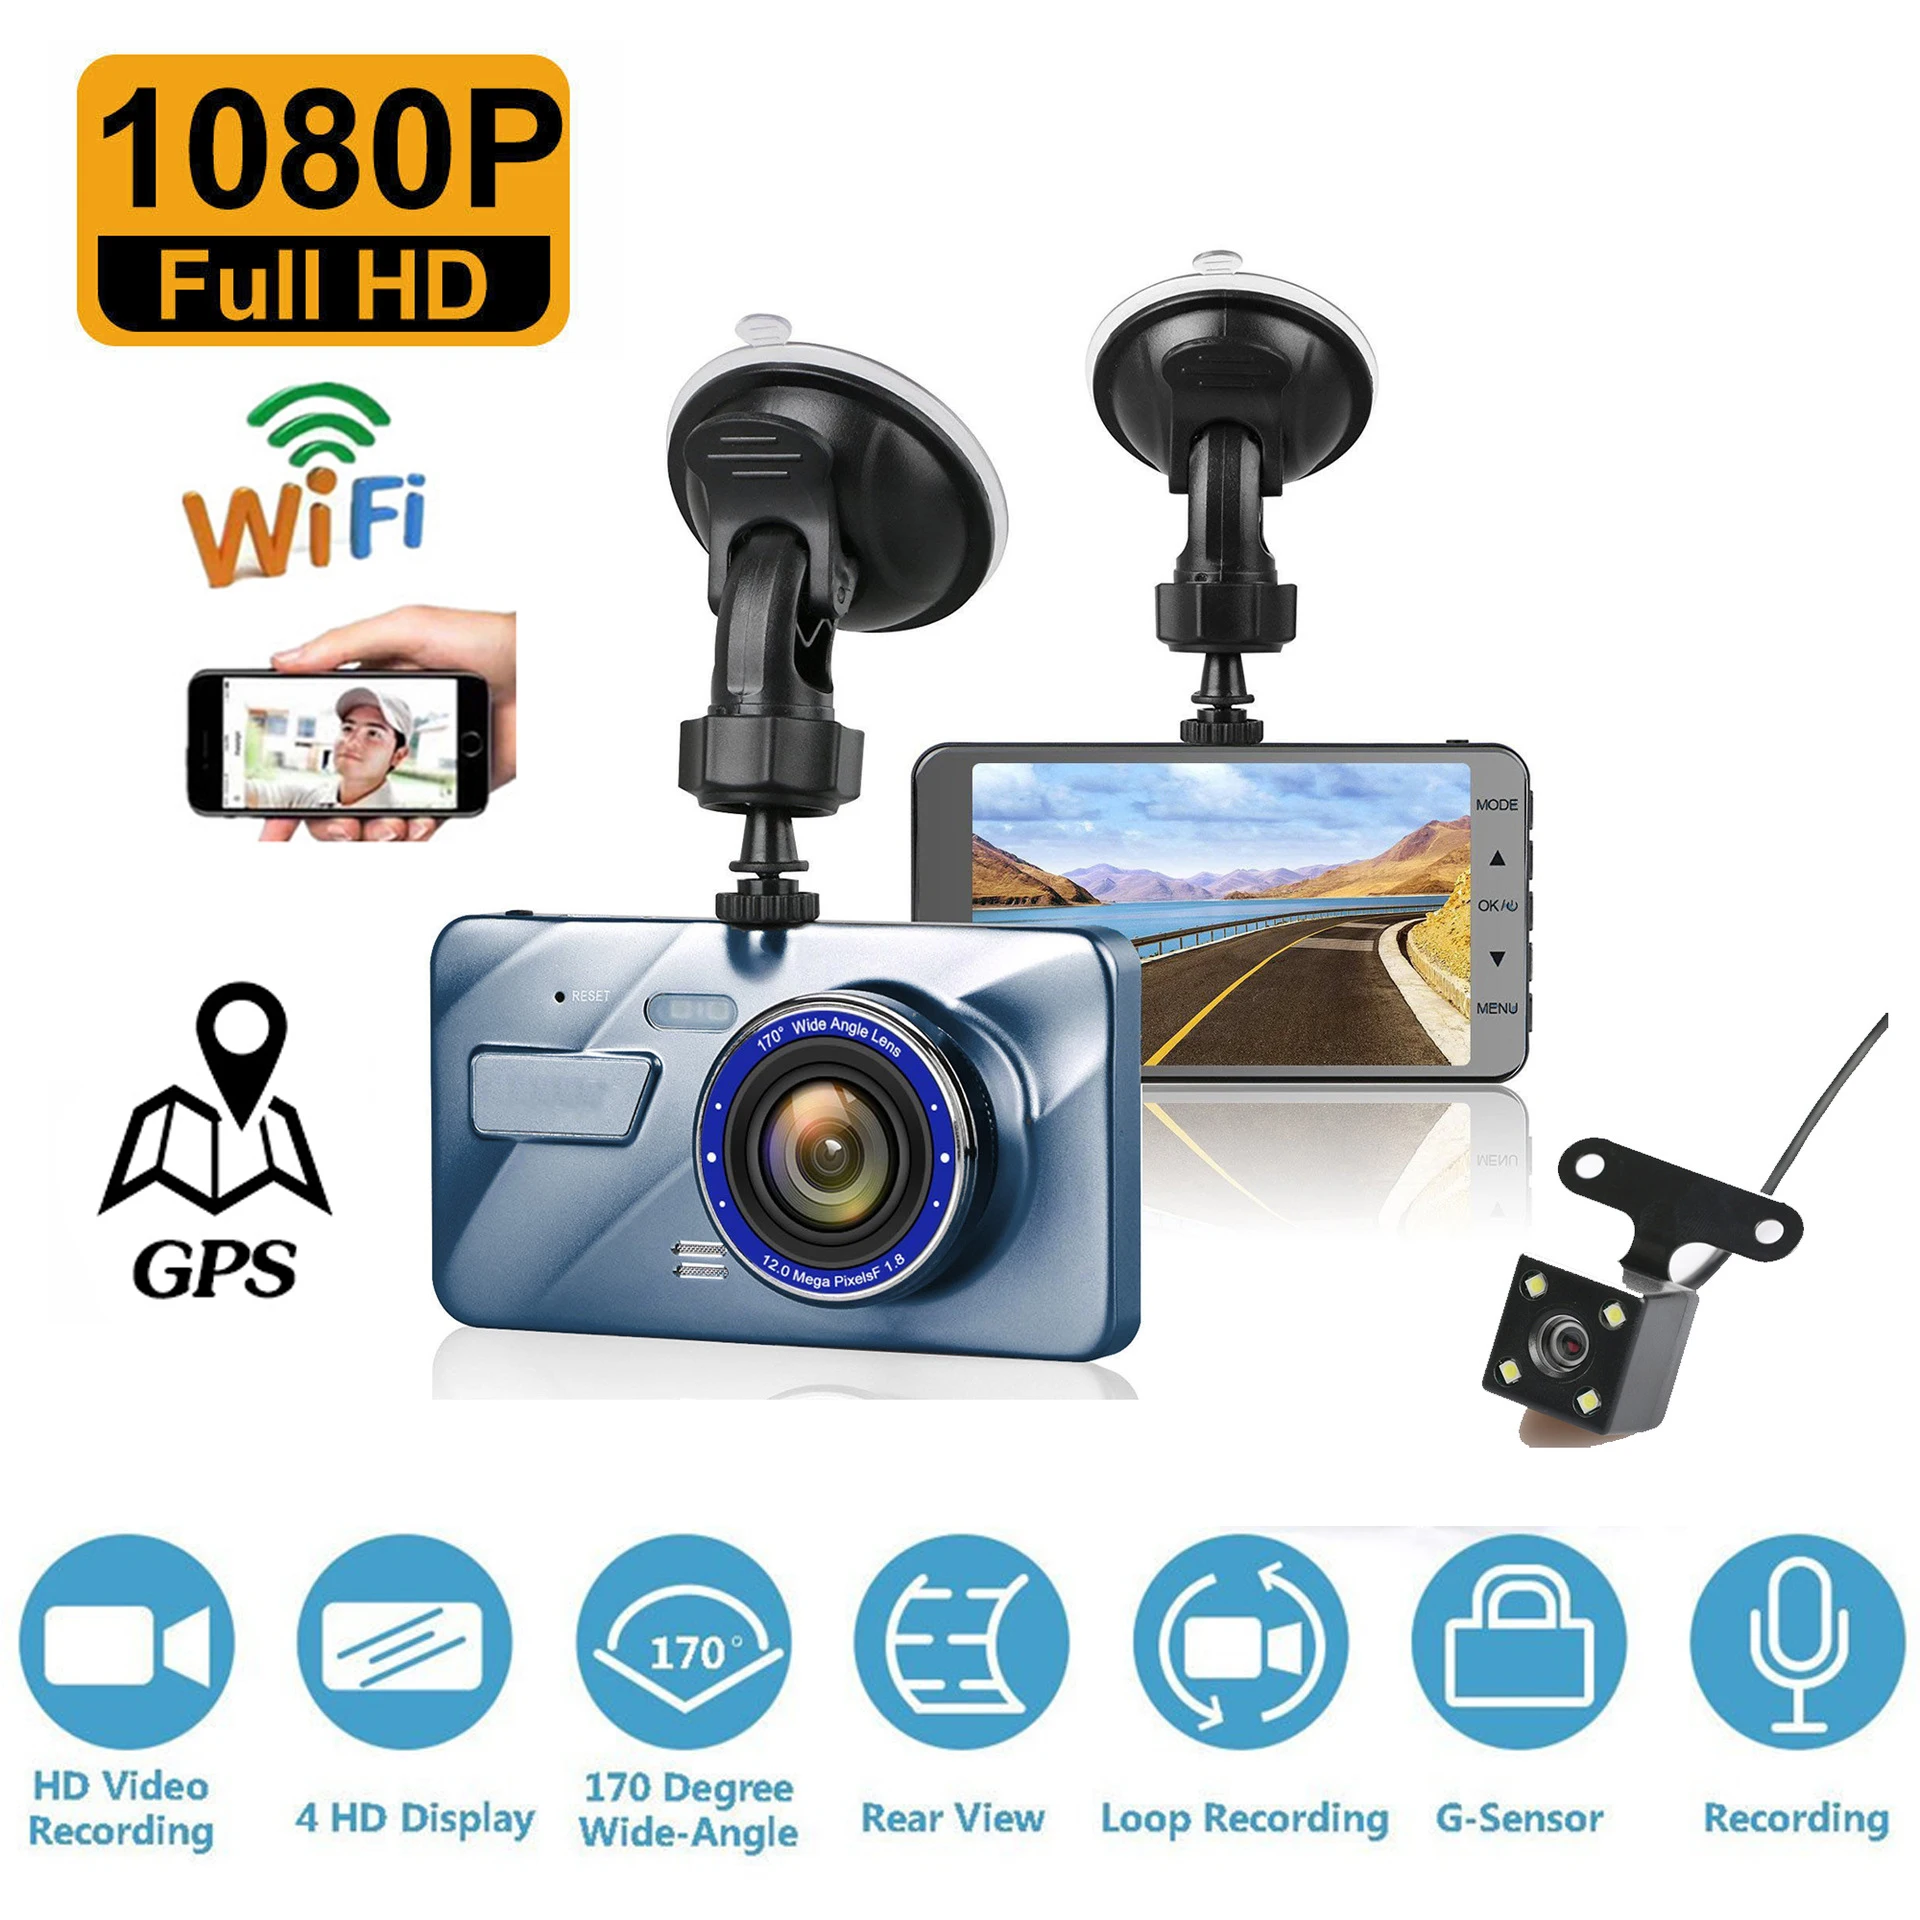 Dash Cam Car DVR WiFi 4.0" Full HD 1080P Rear View Camera Video Recorder Night Vision Black Box Auto Dashcam GPS Car Accessories